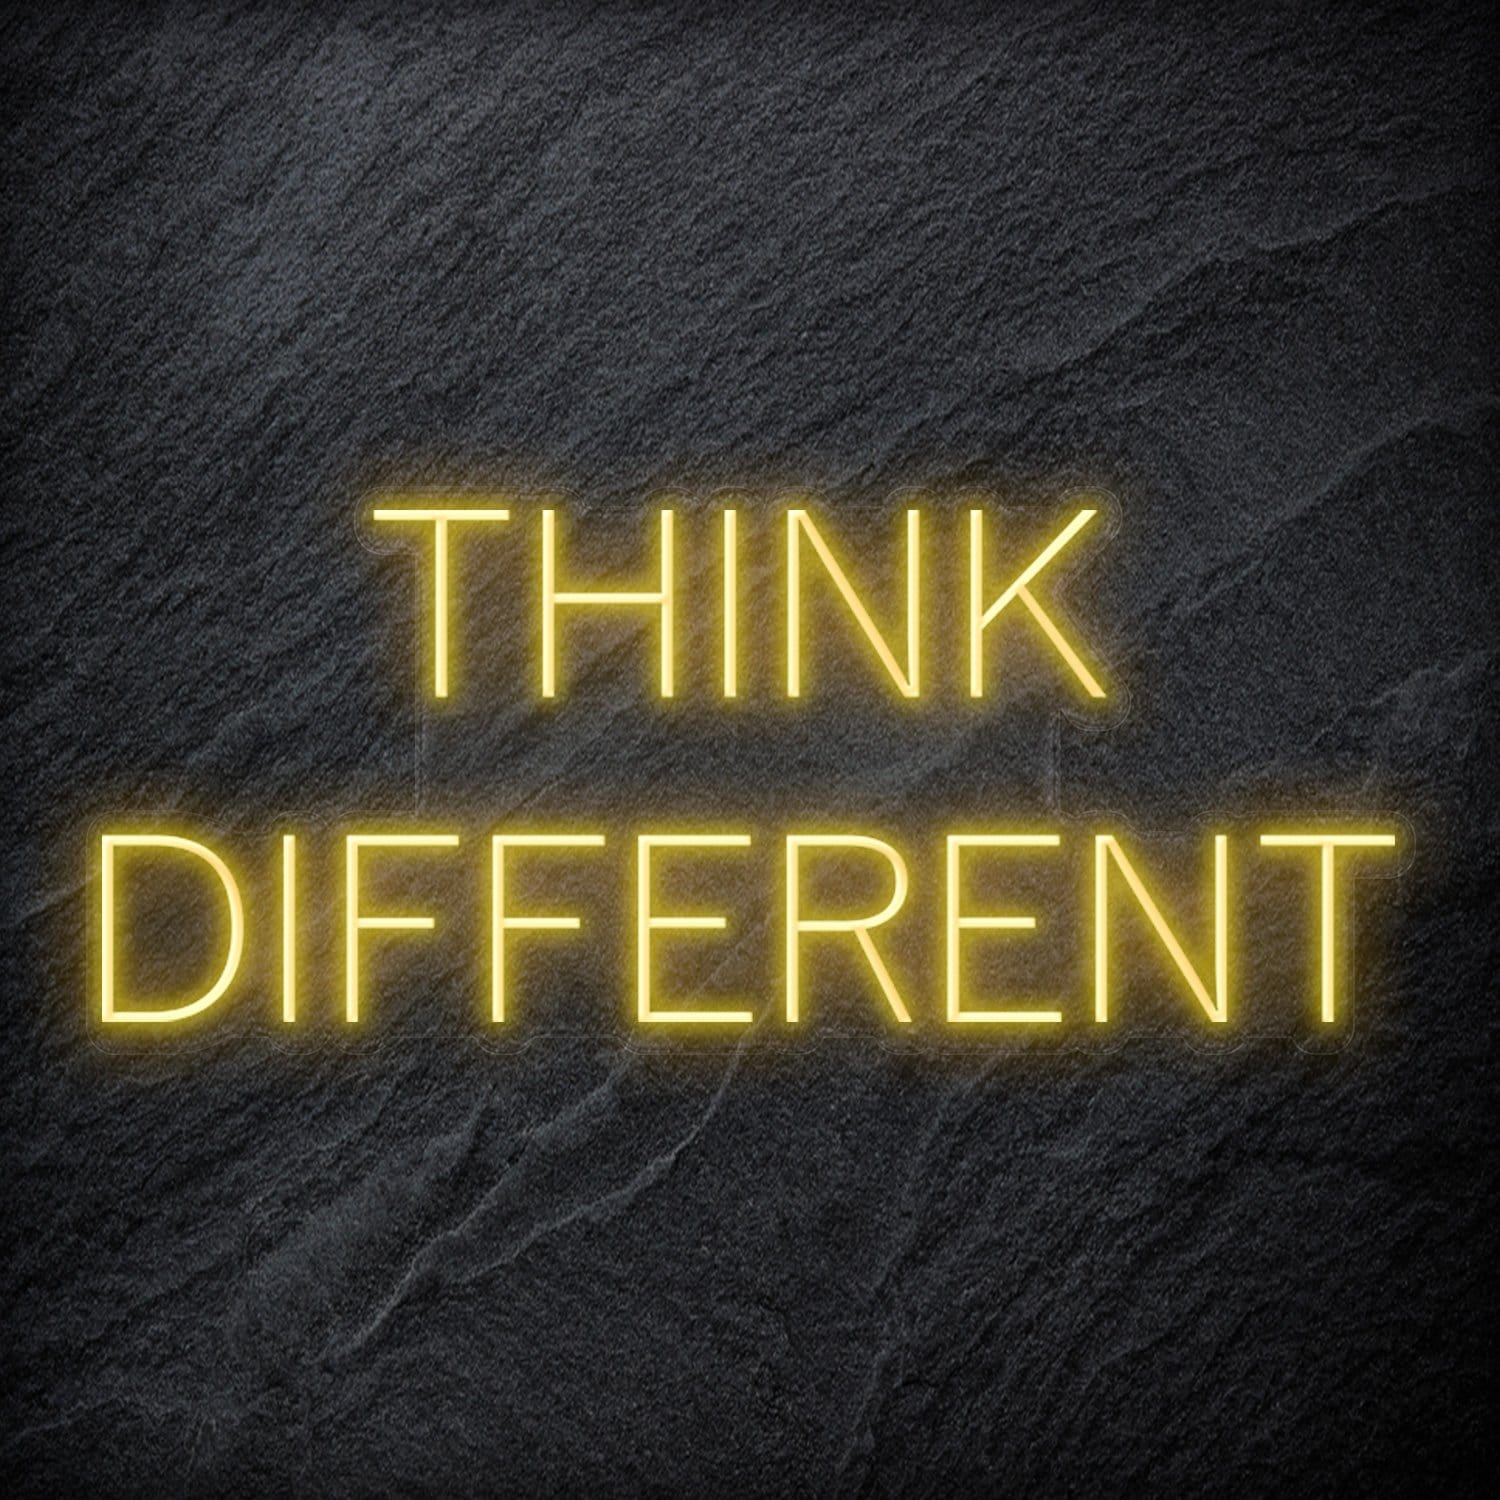 "Think Different" LED Neon Schriftzug Sign - NEONEVERGLOW